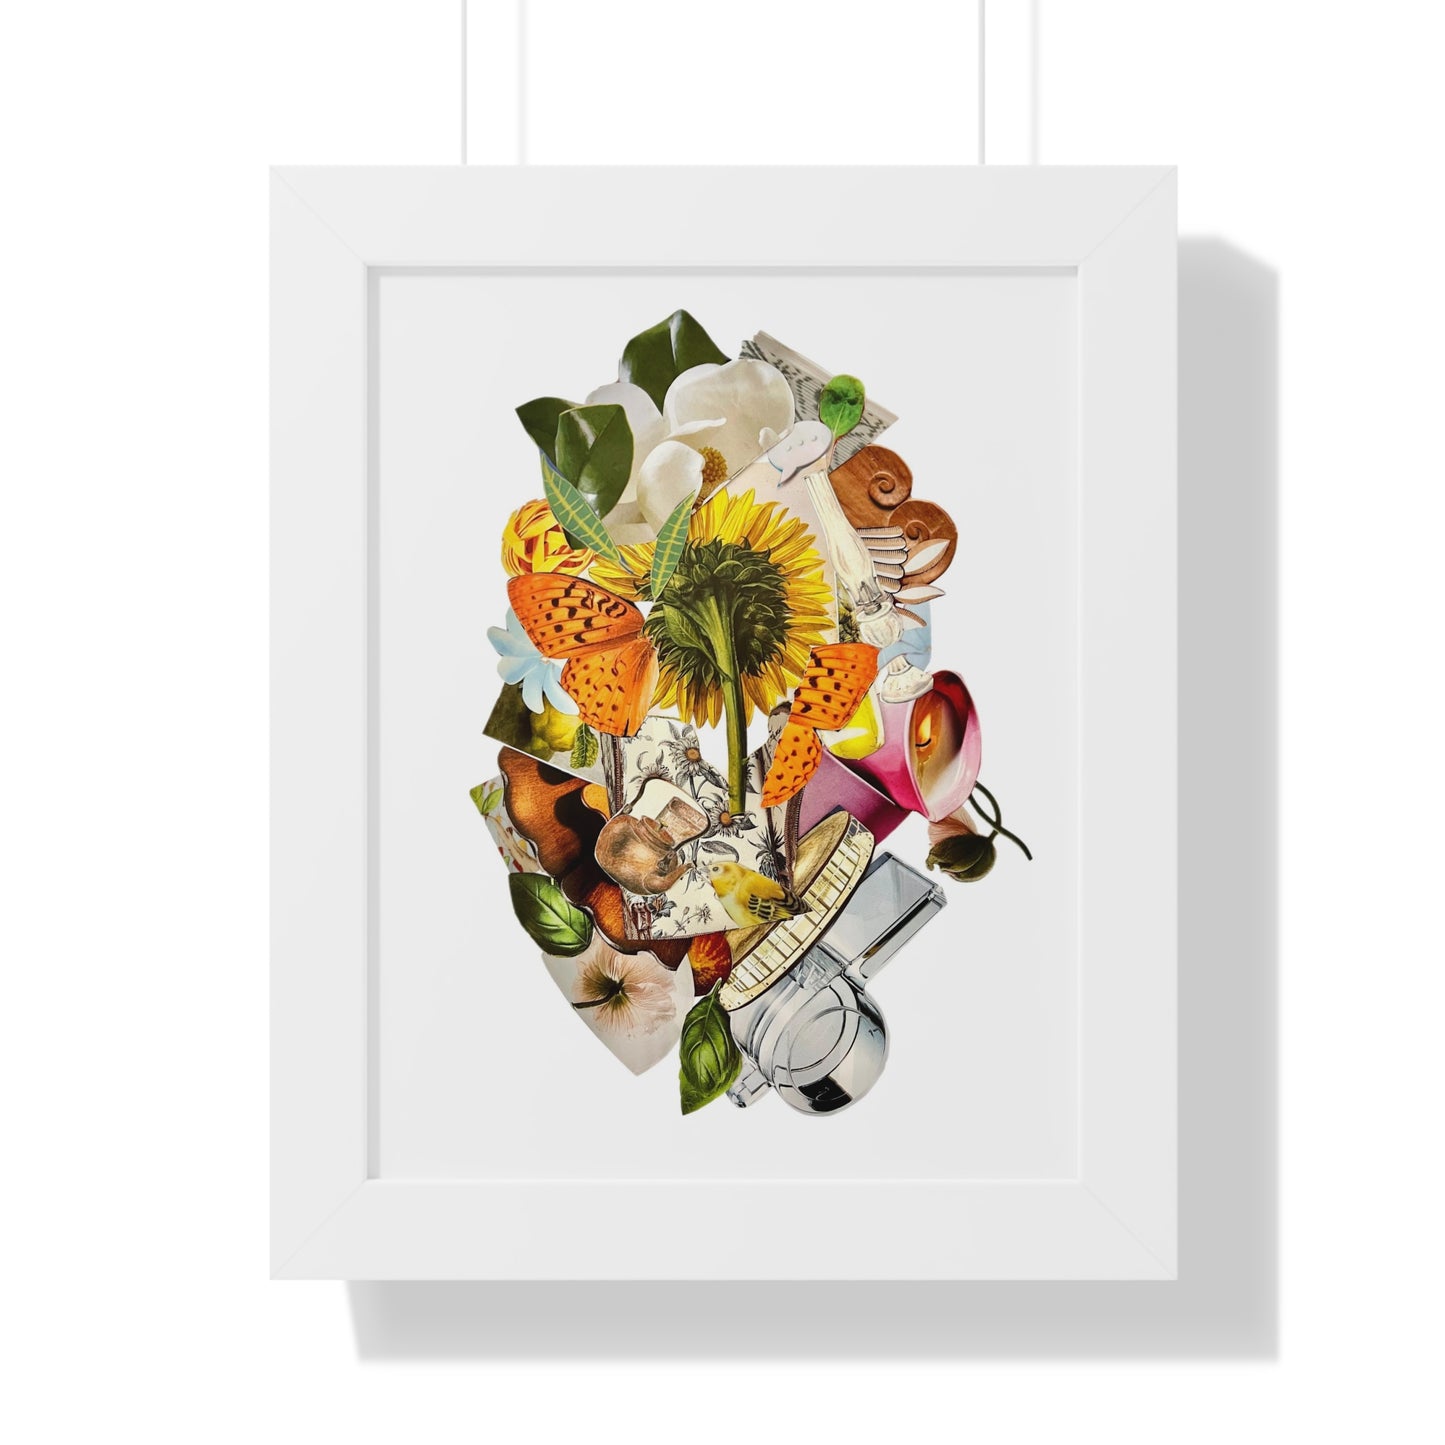 "Sunflower"" Framed Collage Poster